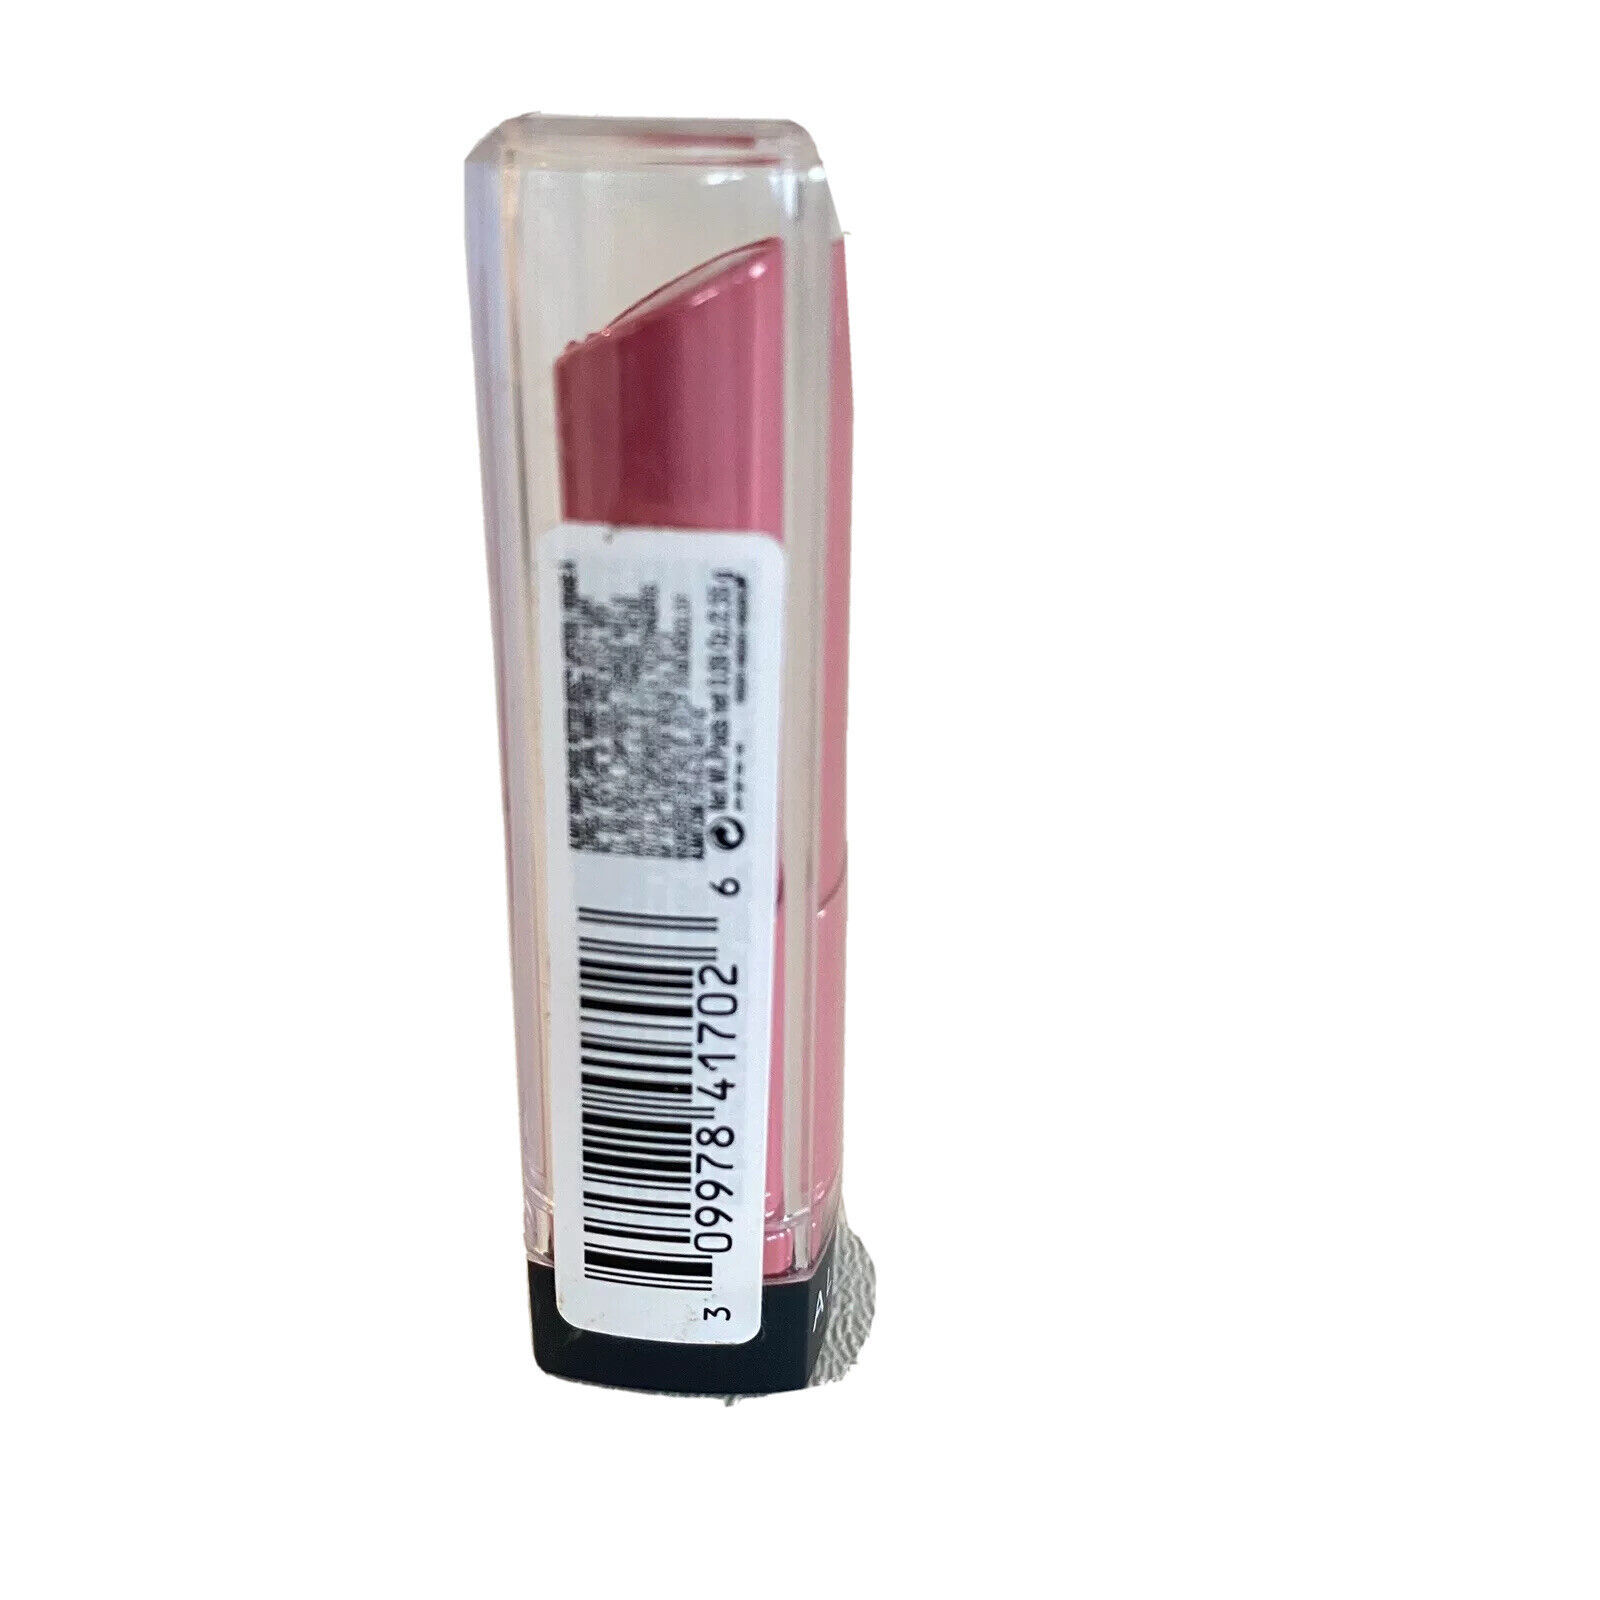 Almay Smart Shade Butter Kiss Lipstick 20 Pink Light Cosmetic Makeup USA New - $9.89